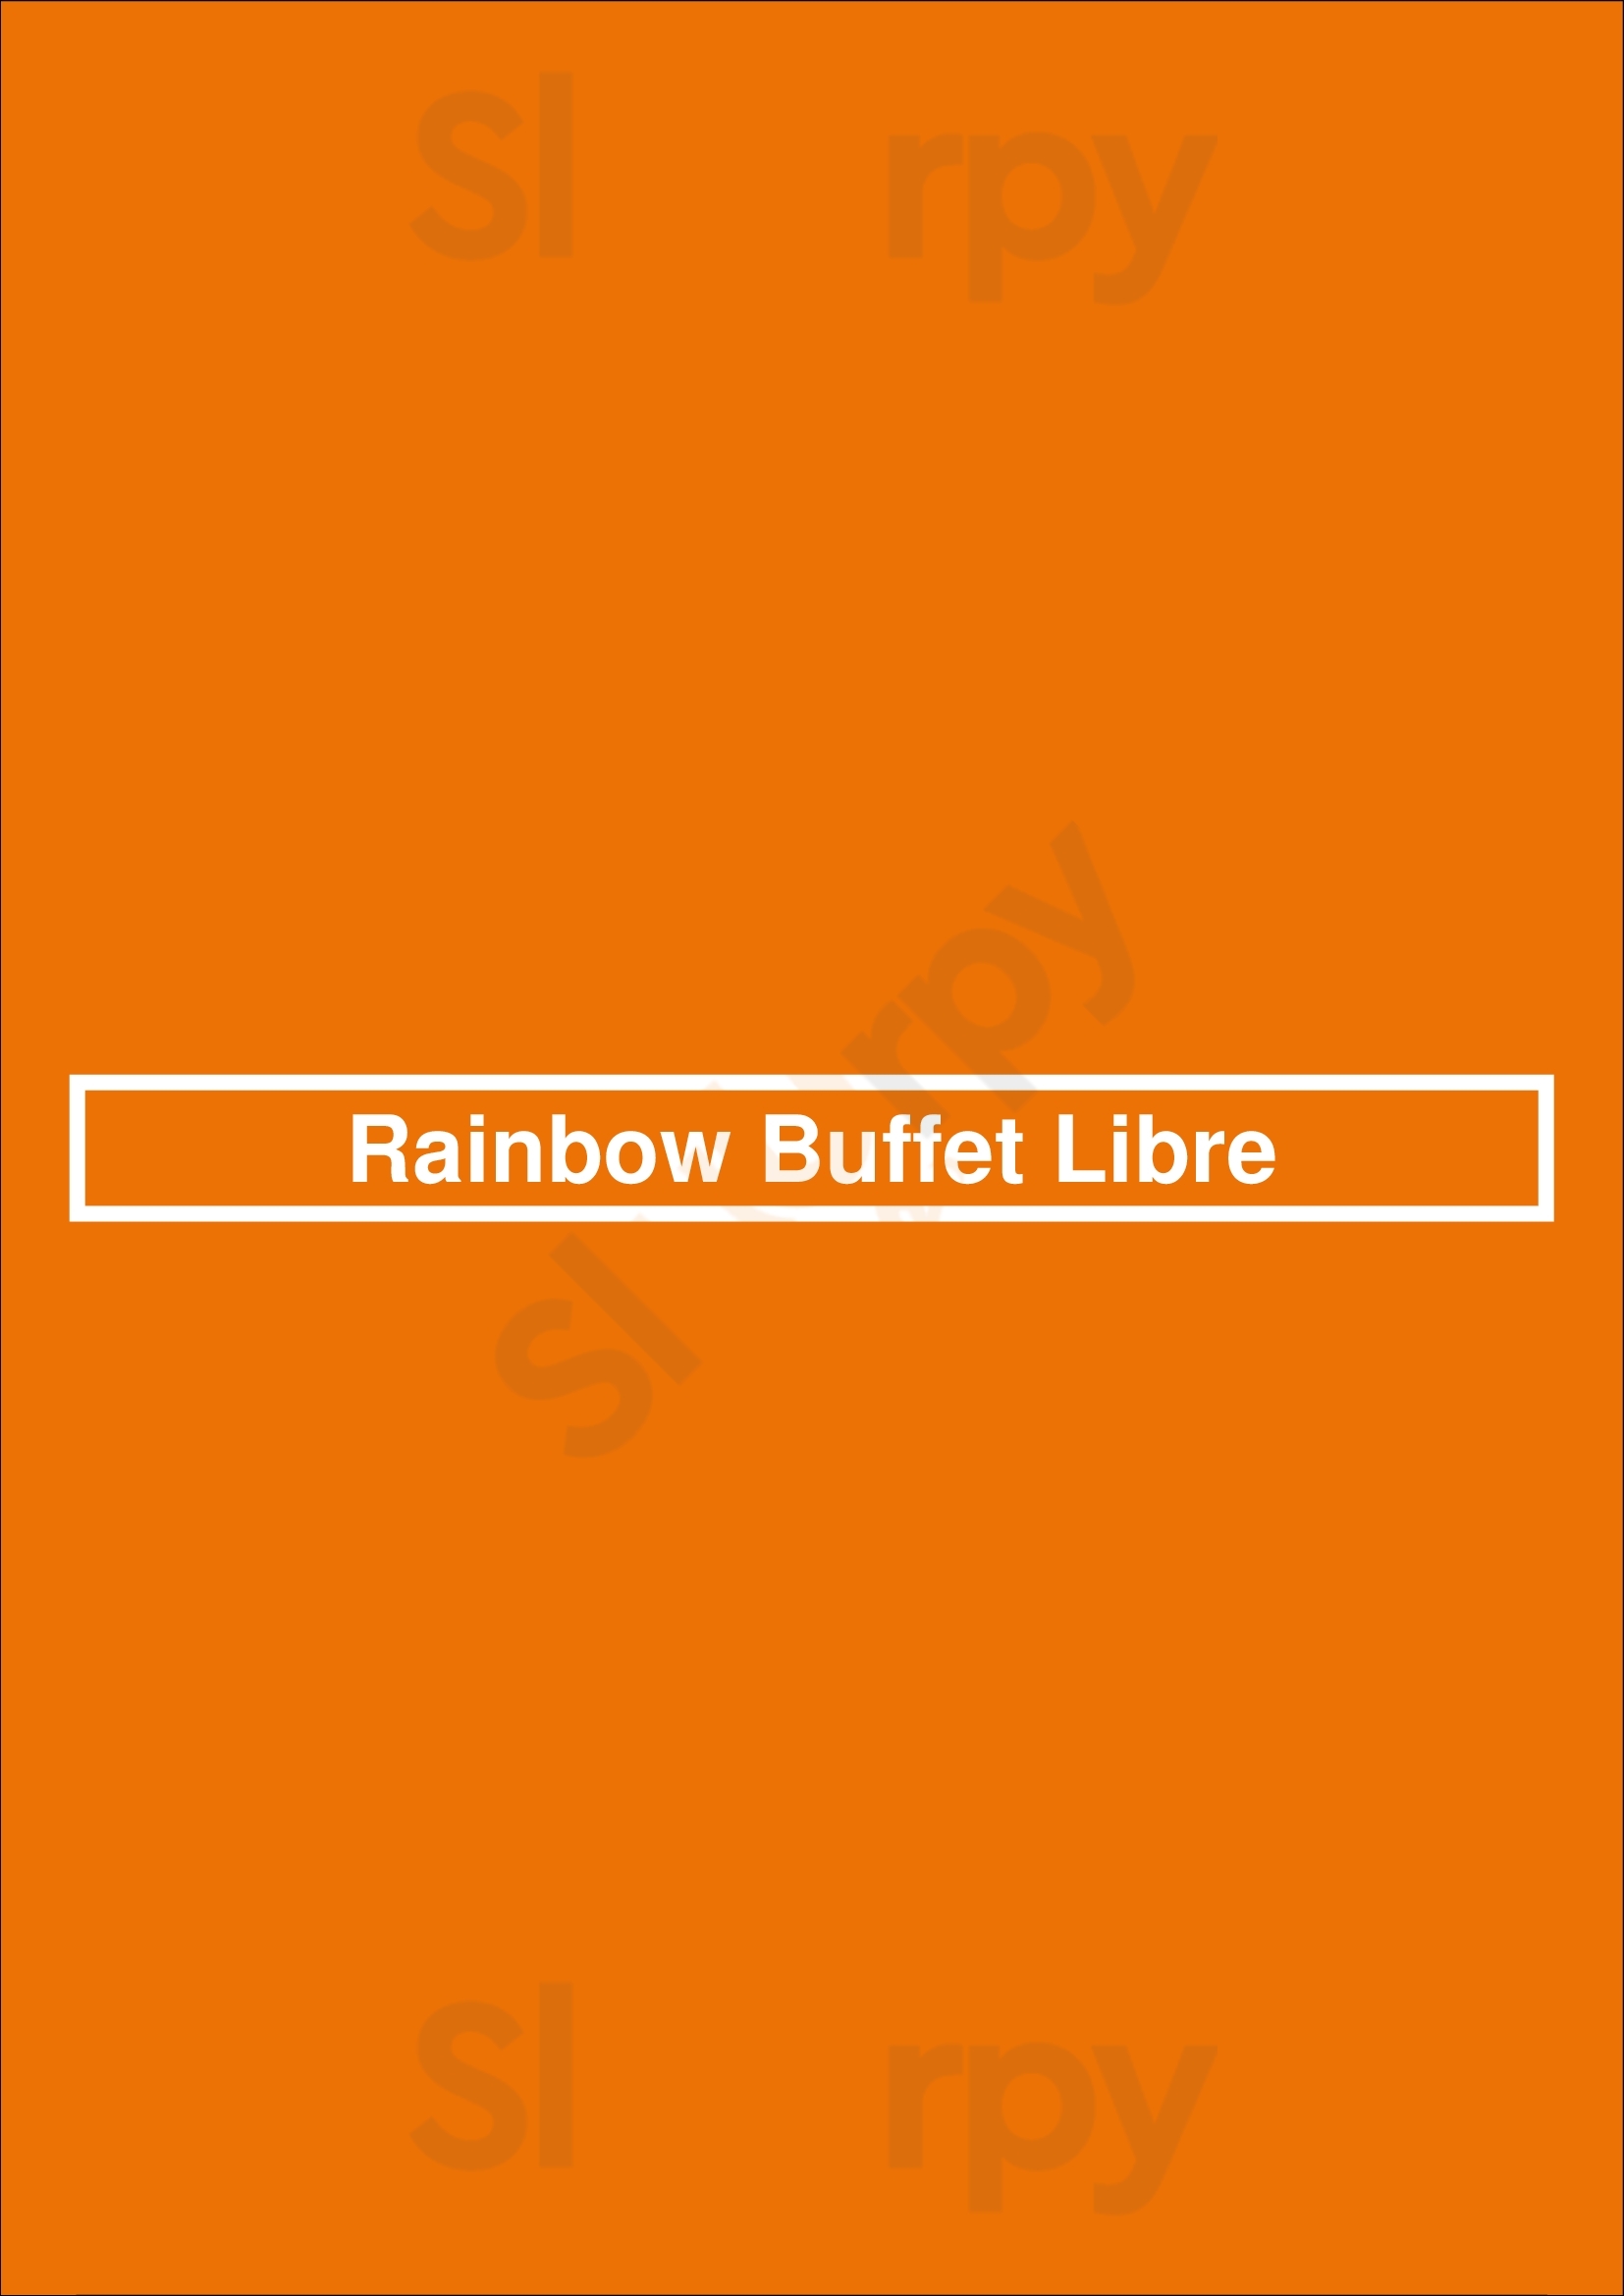 Rainbow Buffet Libre Barcelona Menu - 1